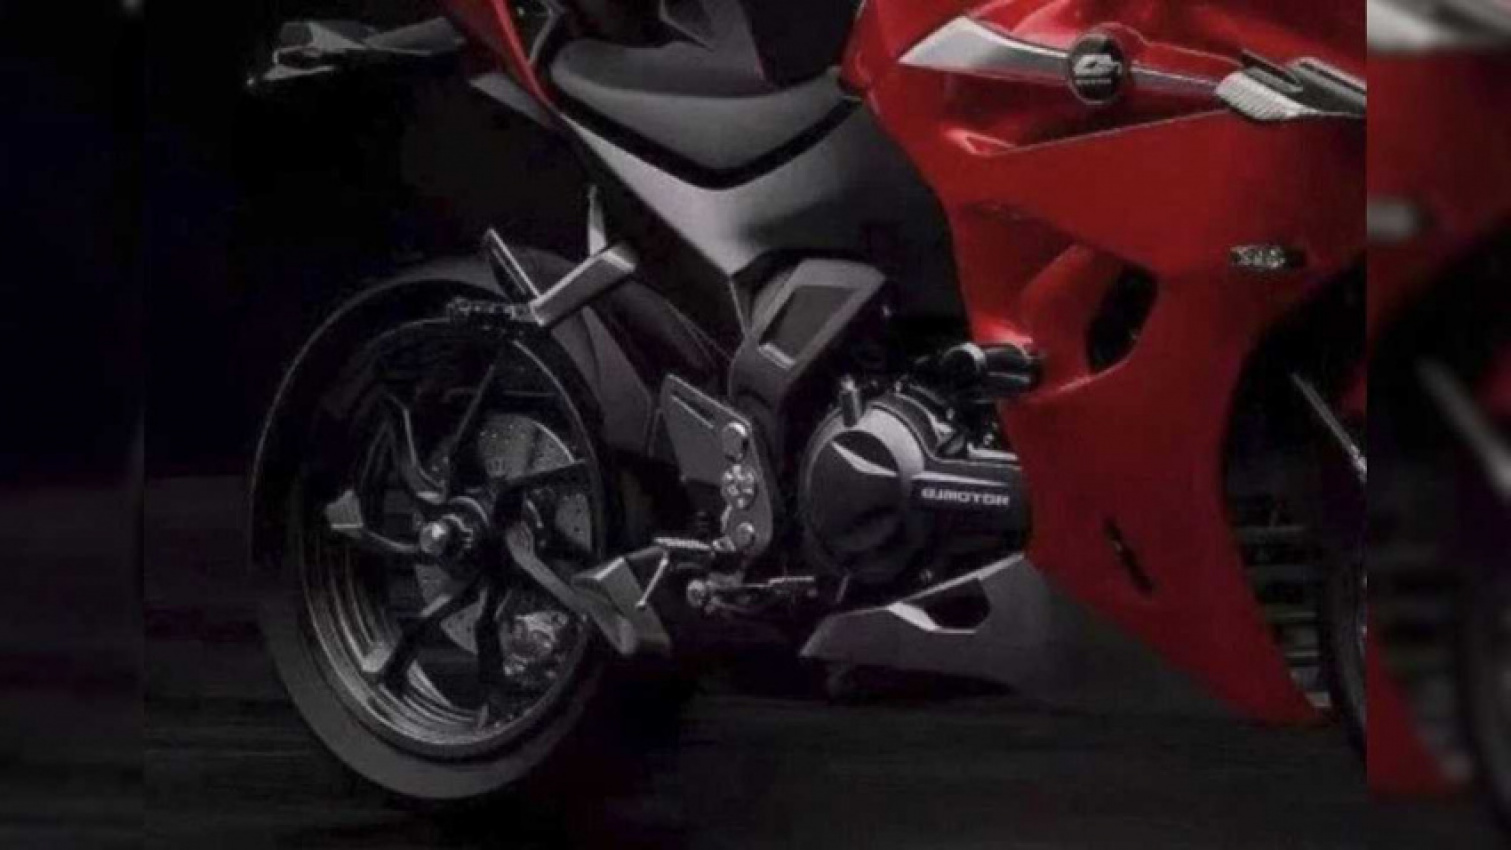 QJ Motor Introduces A New 550cc Sportbike